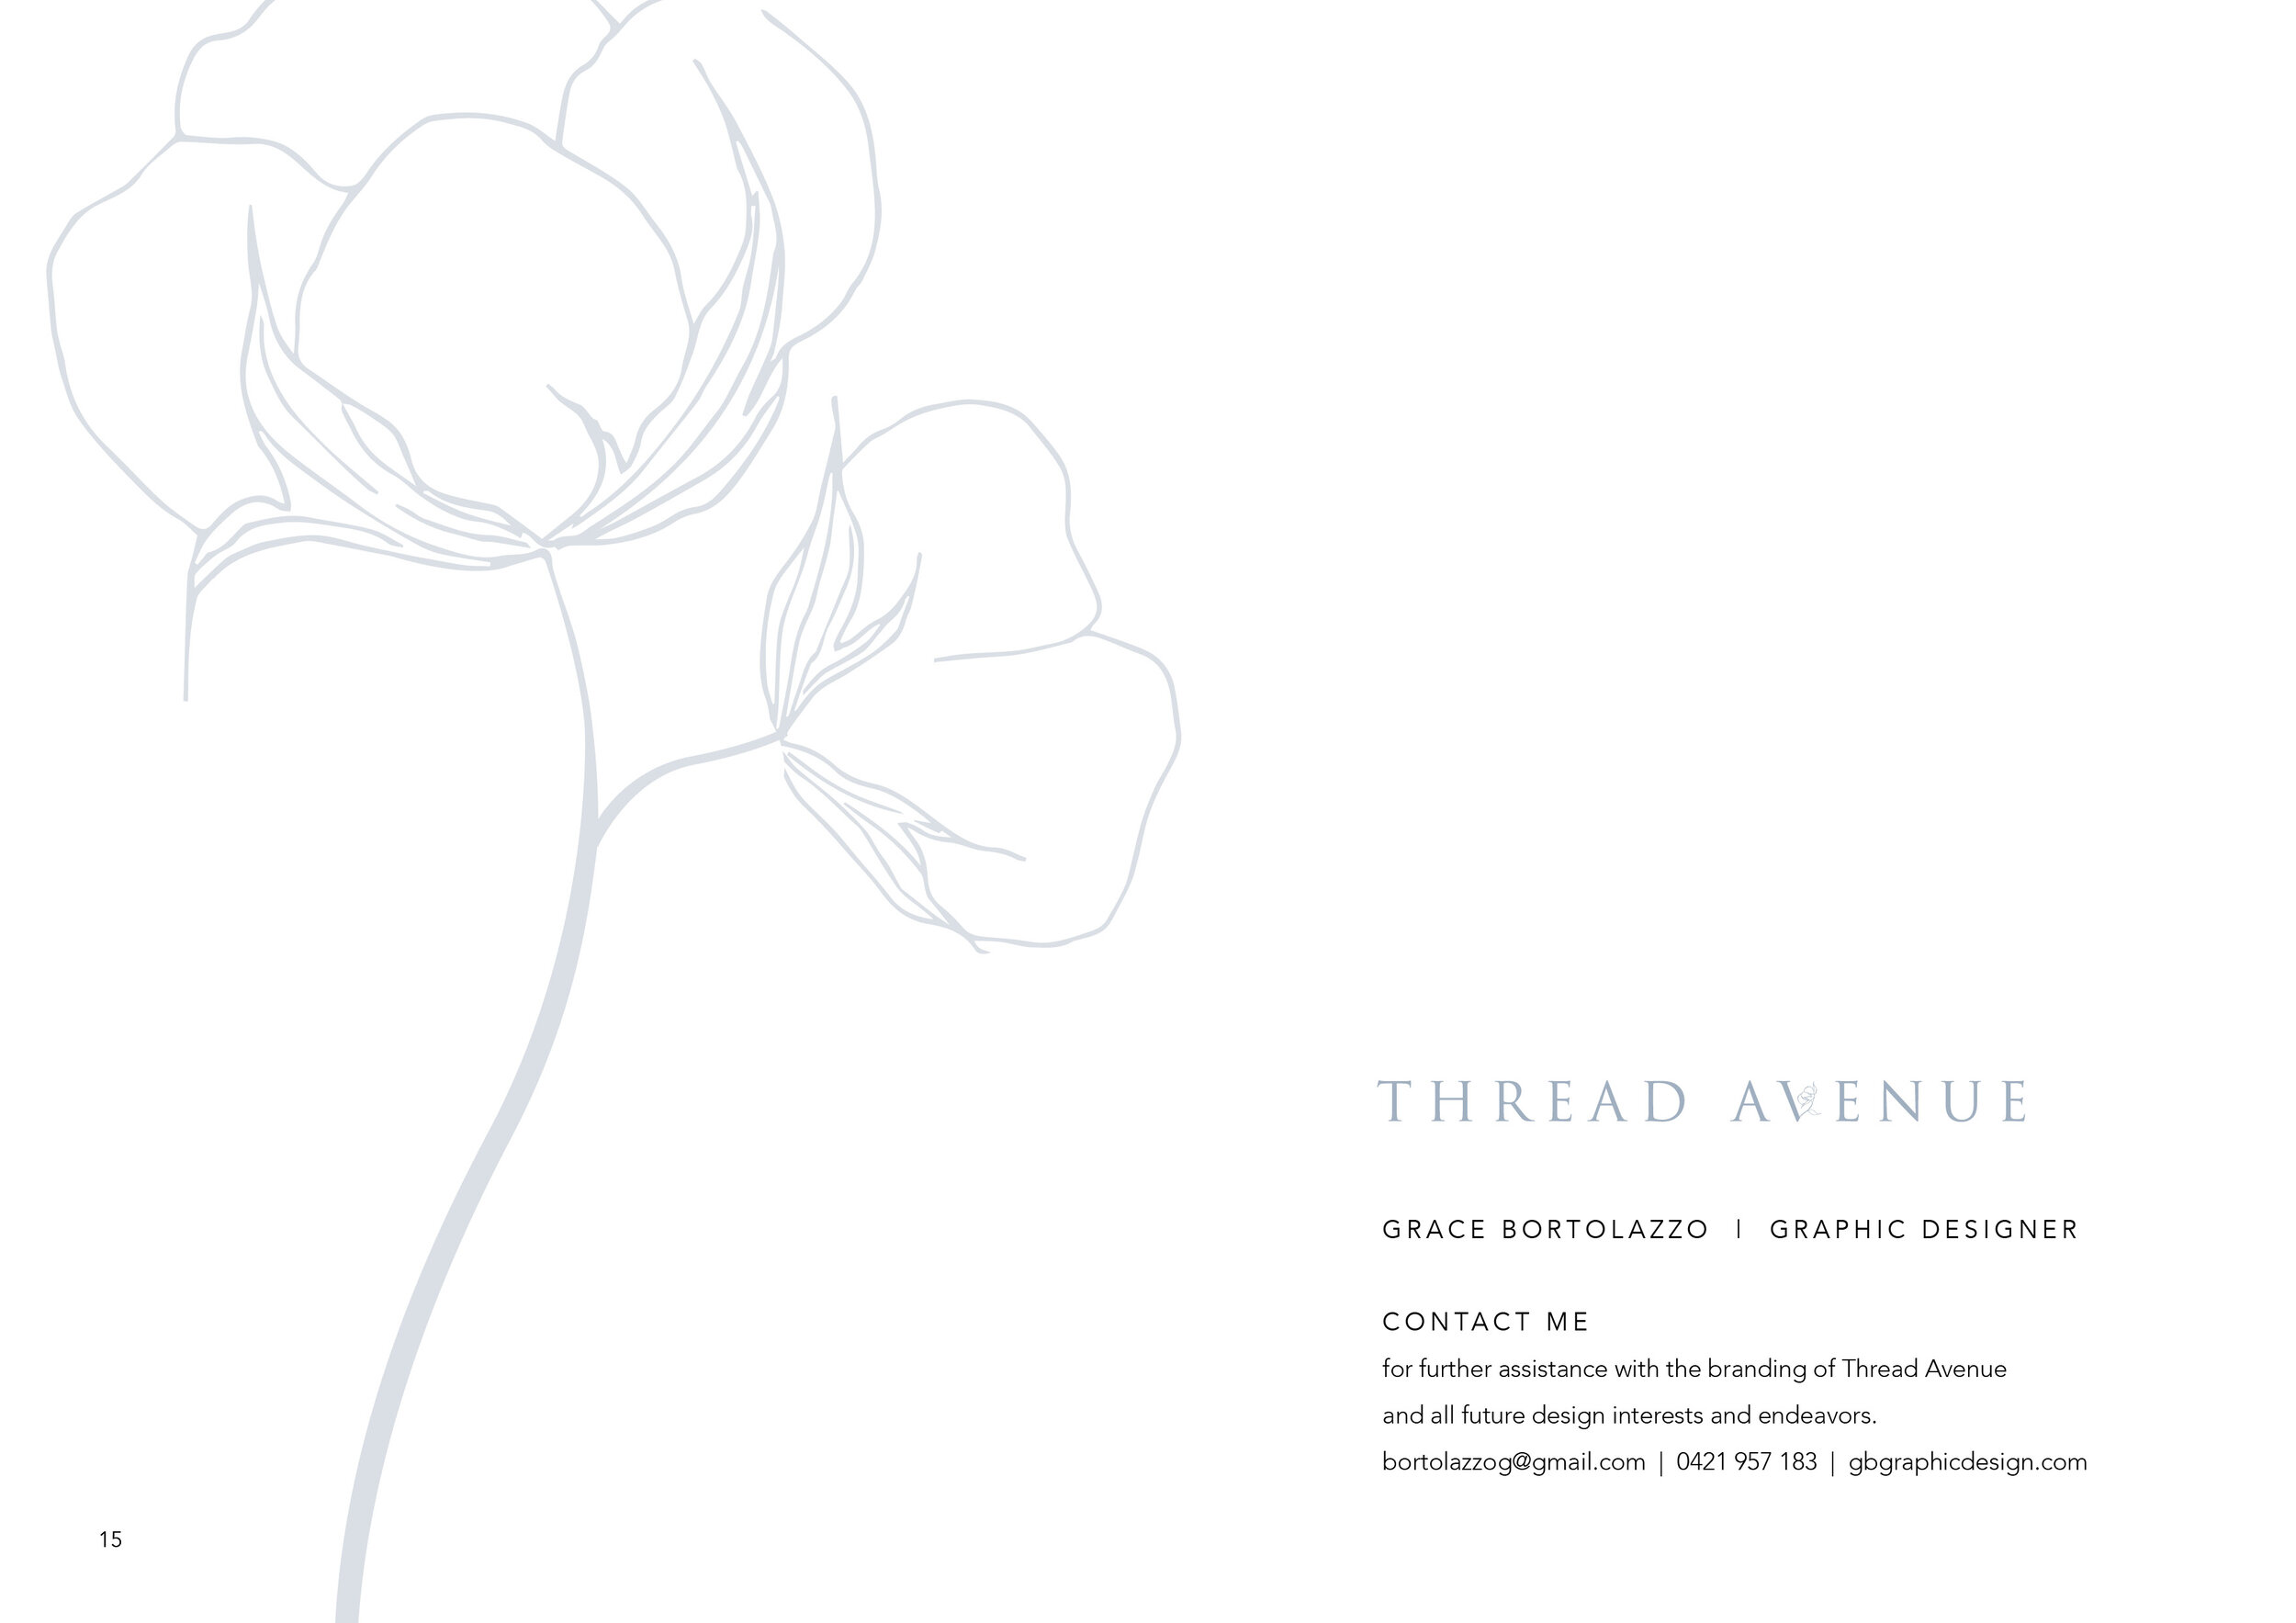 Thread Avenue Brand Guidelines15.jpg